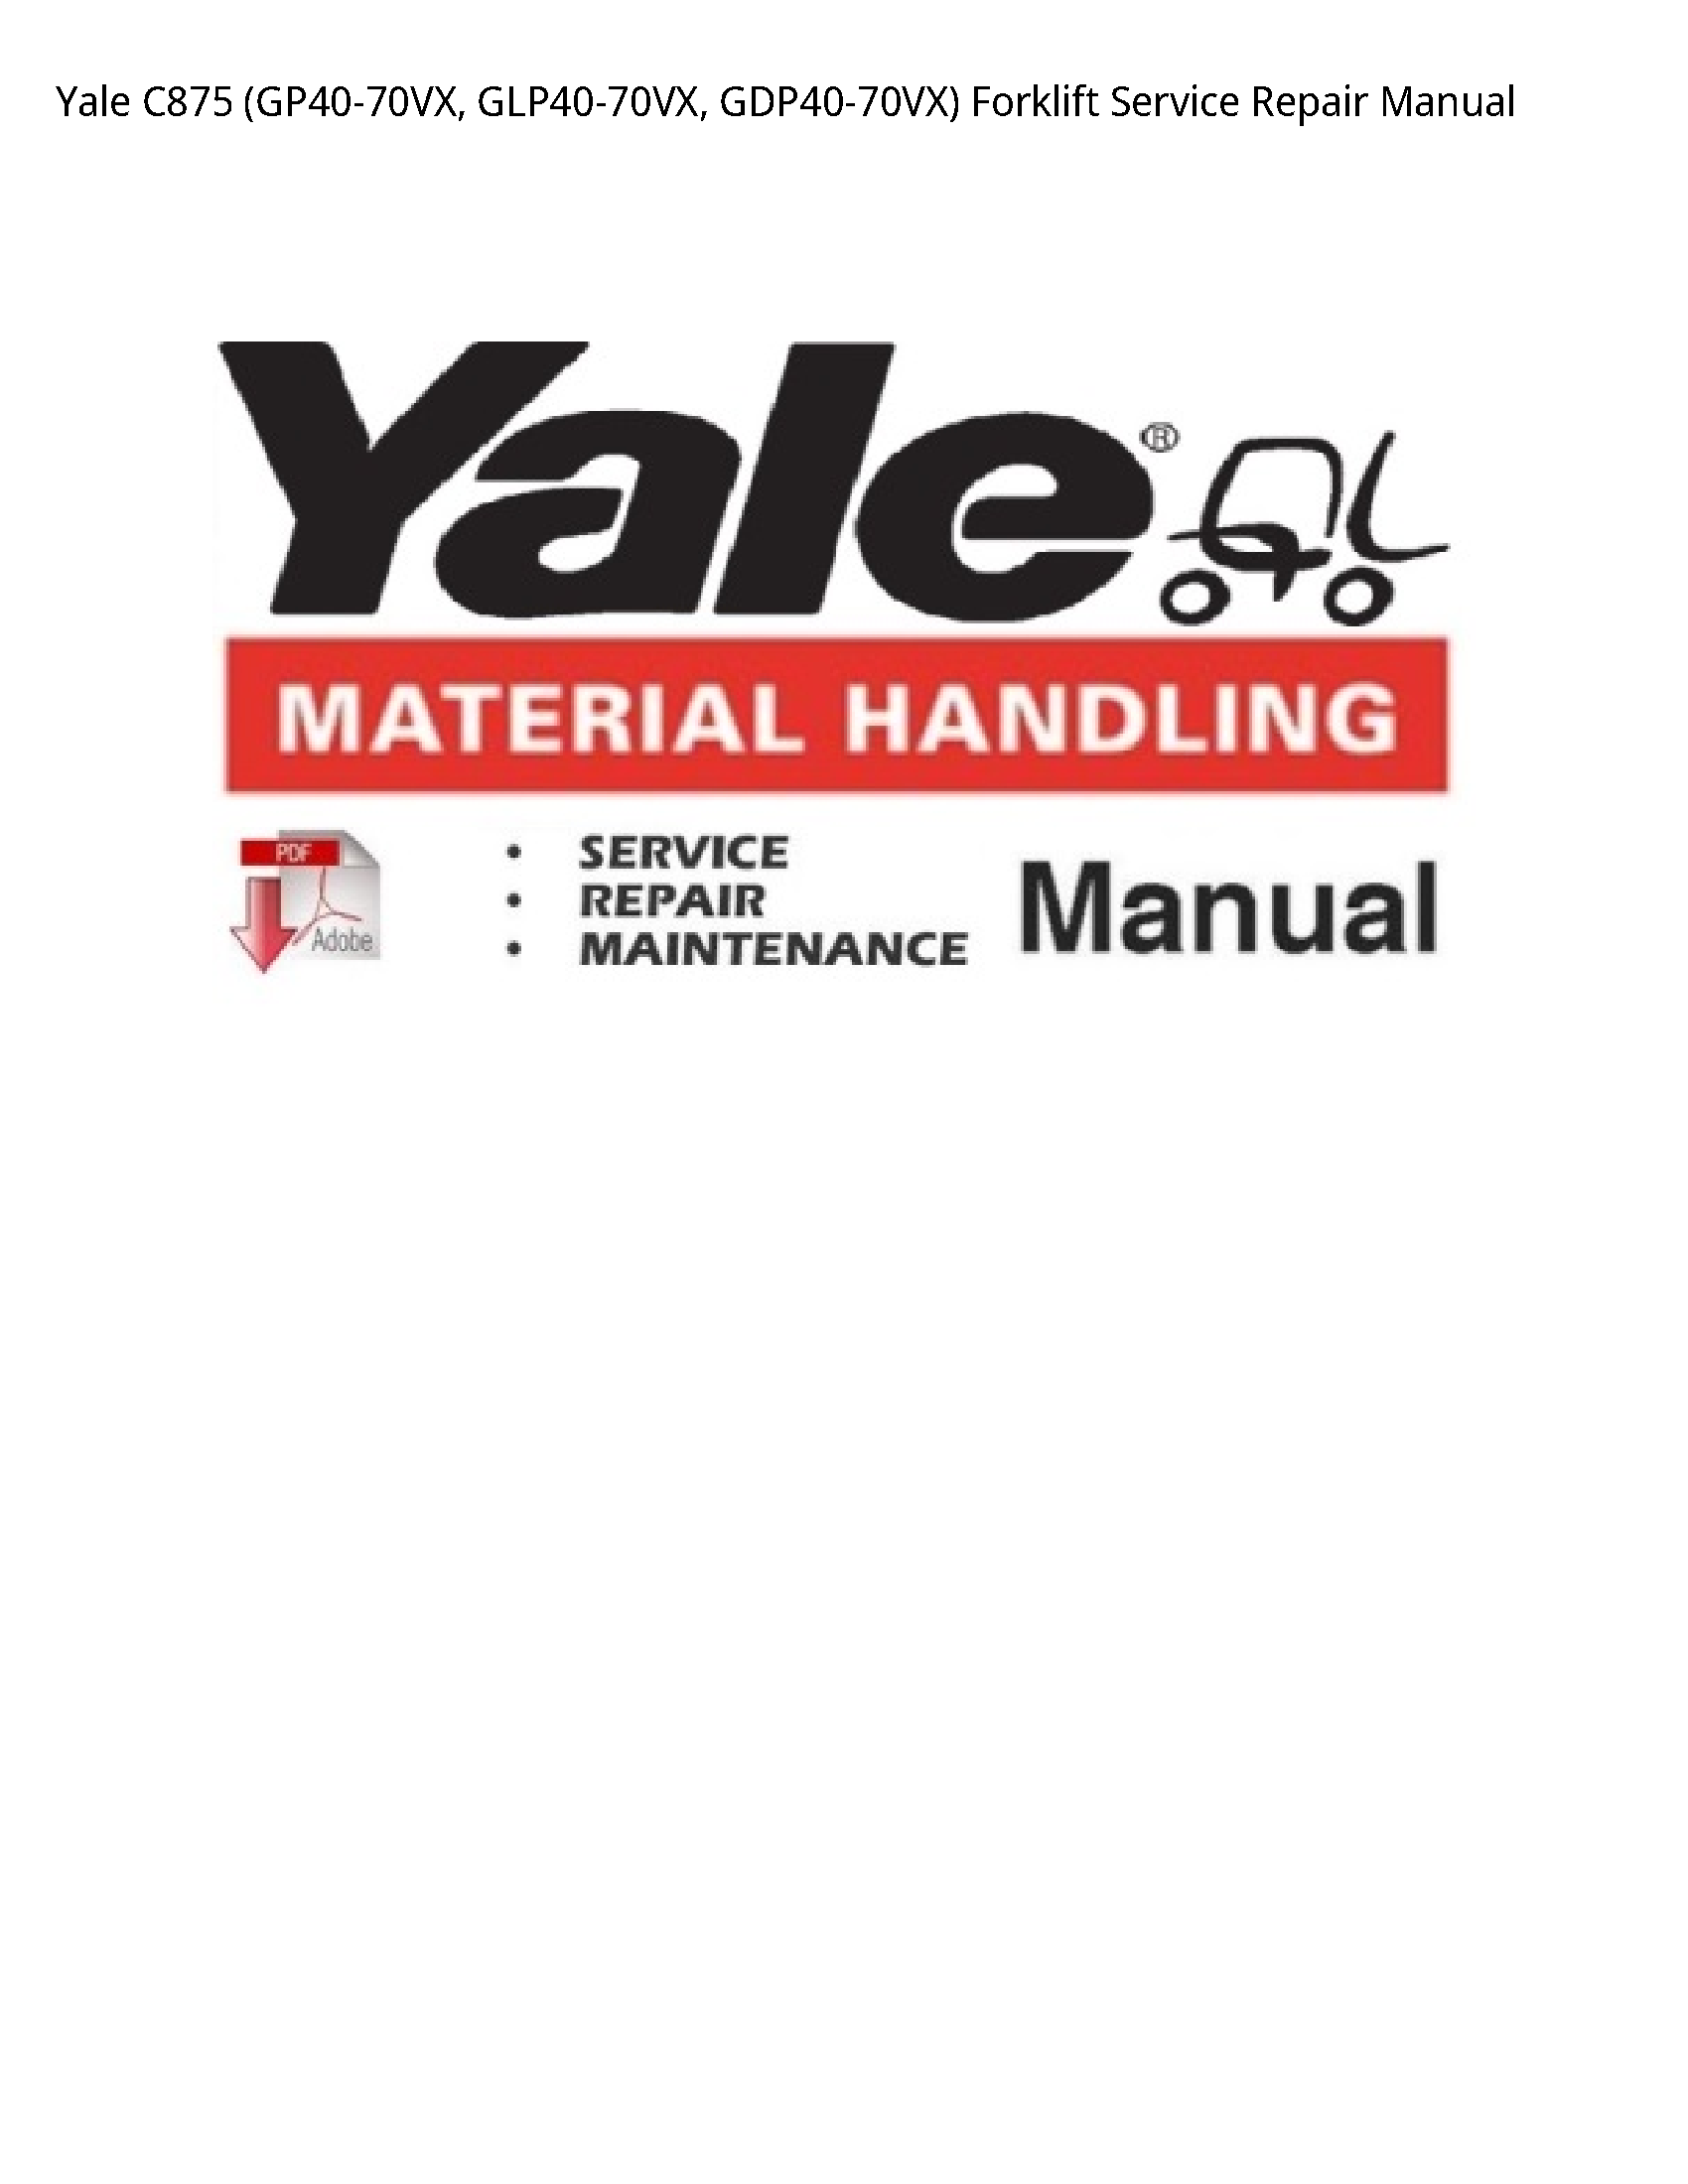 Yale C875 Forklift manual